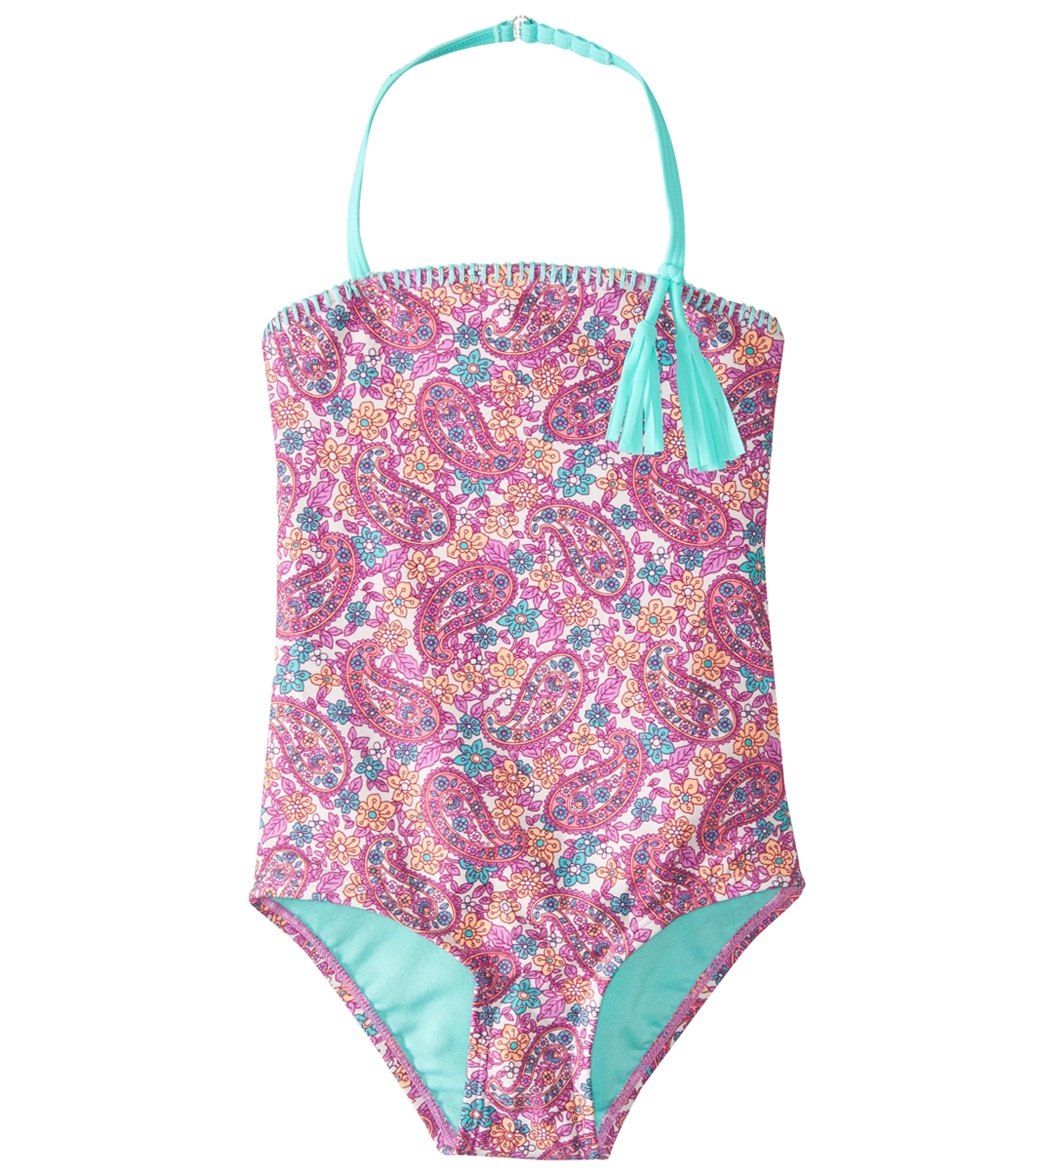 Hula Star Girls' Paisley Dream One Piece Swimsuit Toddler - Multi 2T Nylon/Spandex - Swimoutlet.com